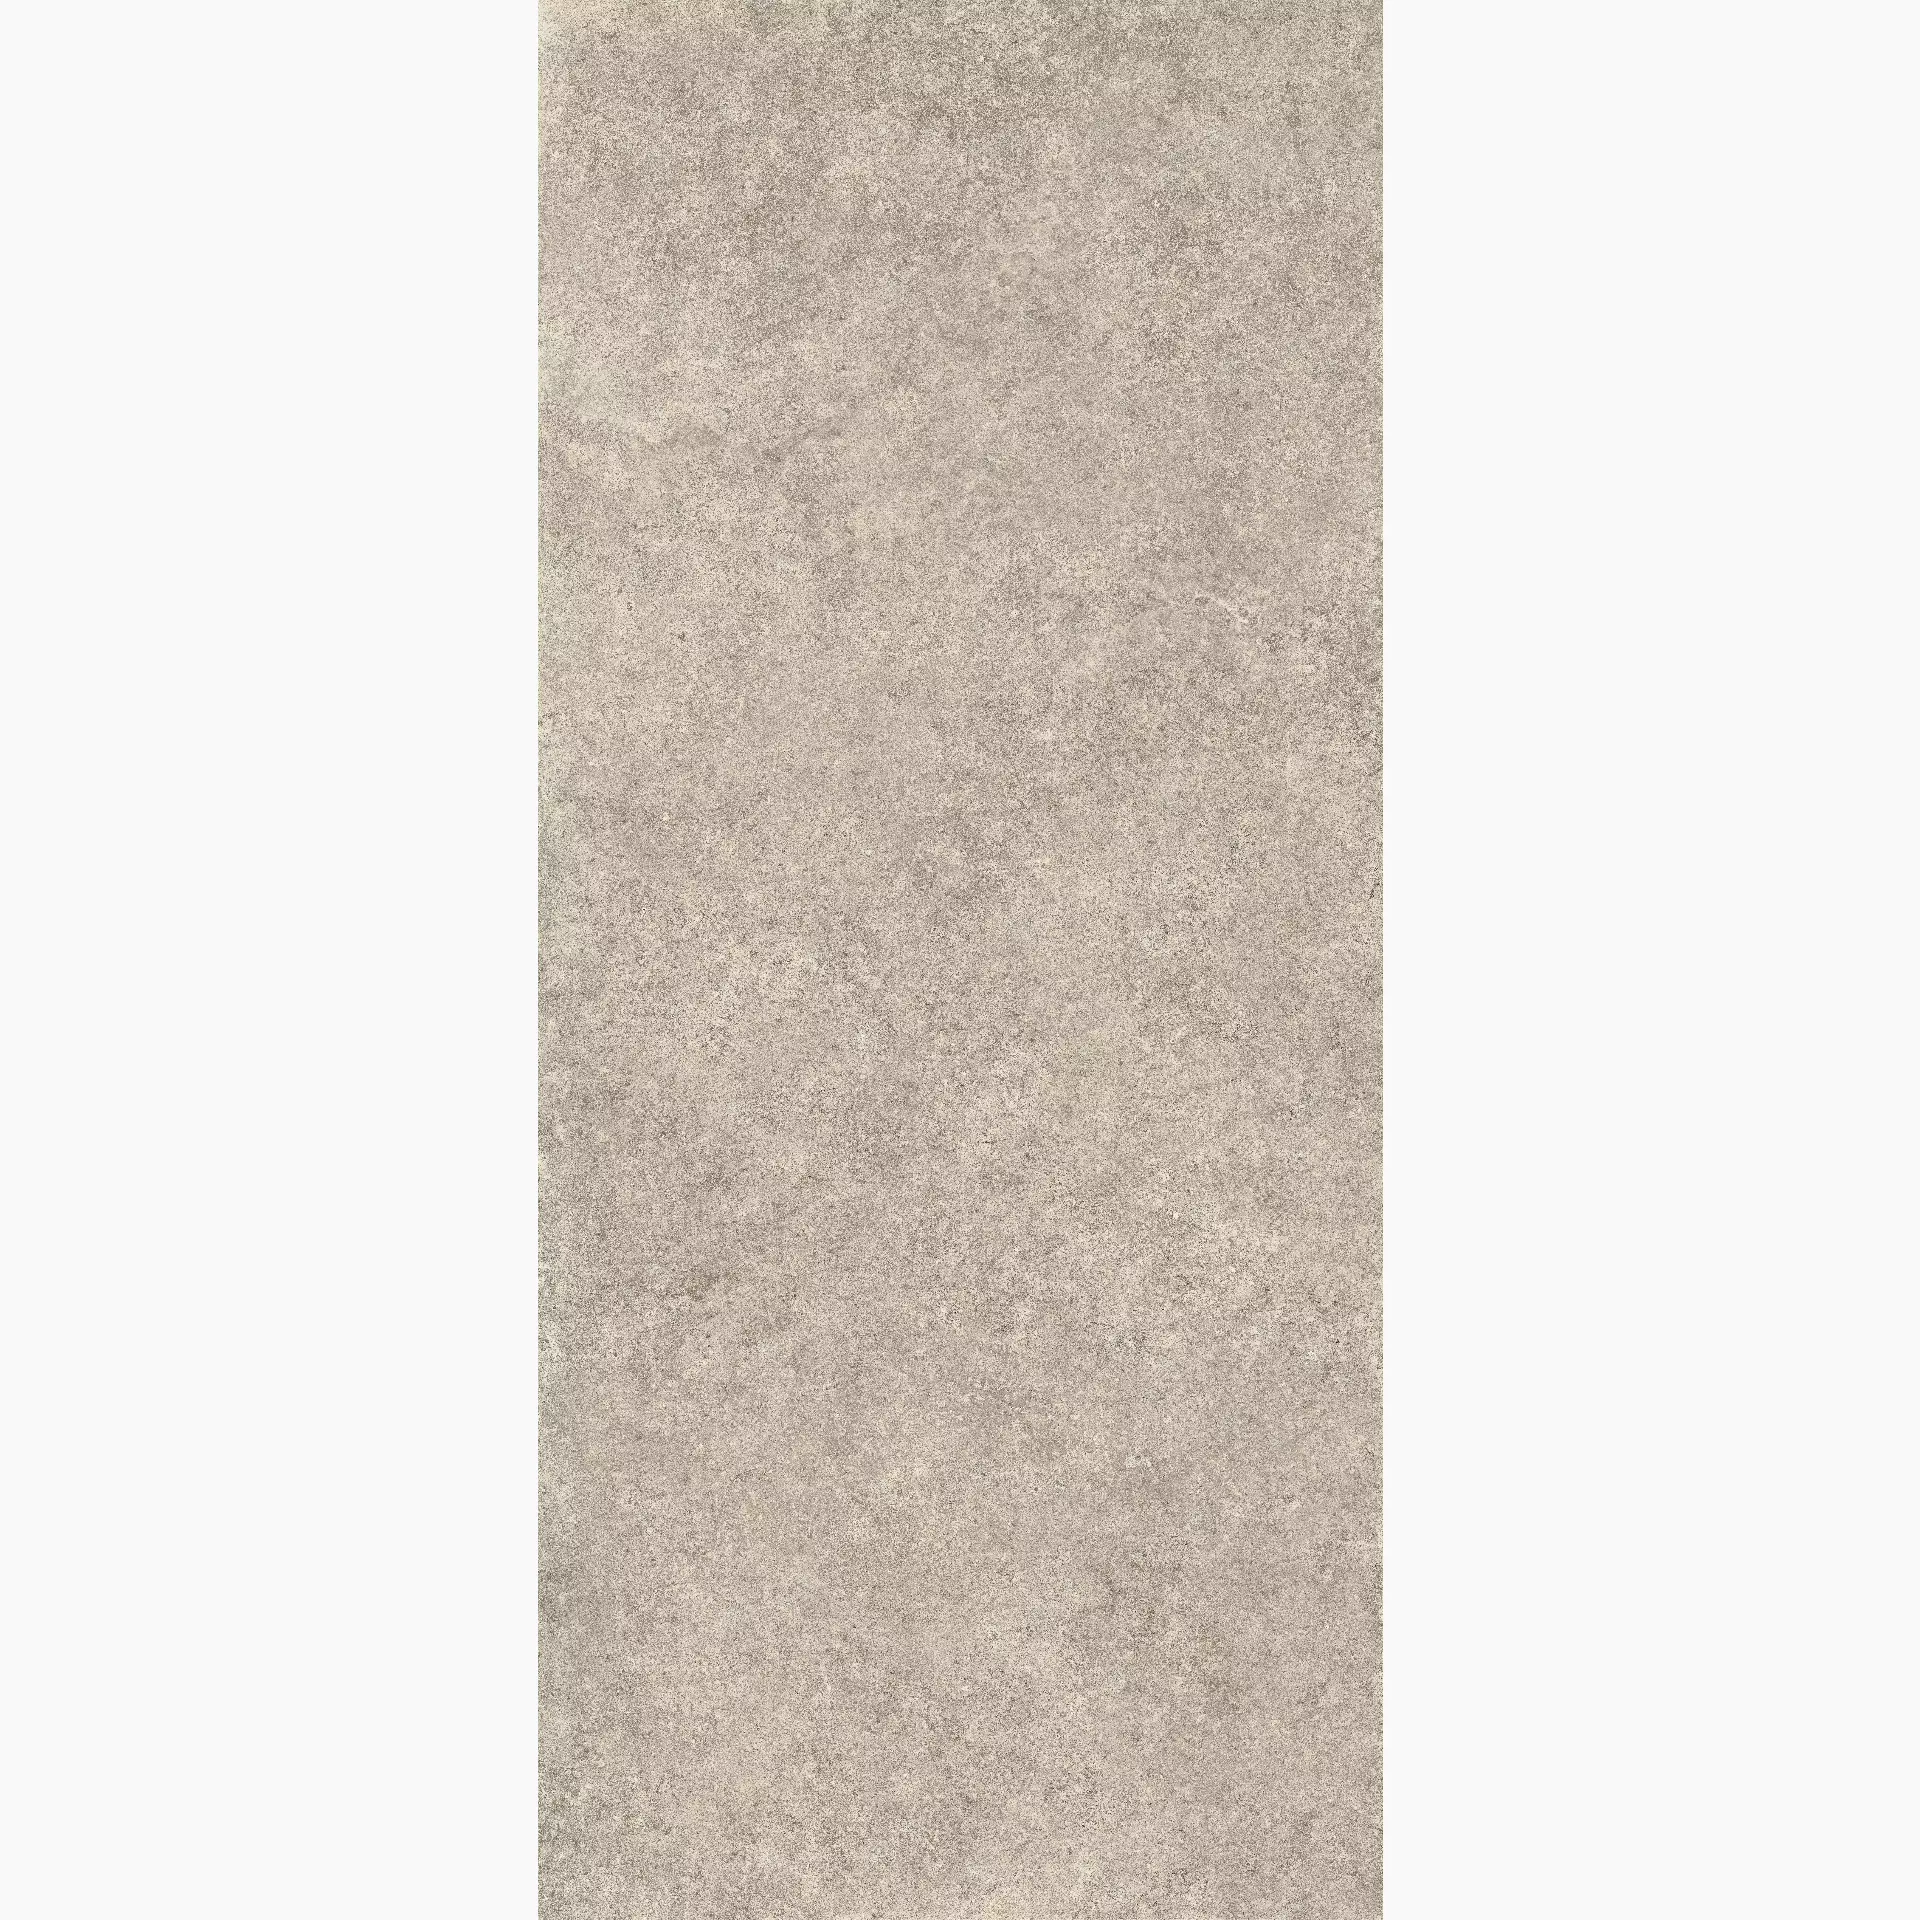 Cottodeste Kerlite Pura Sand Chiseled Sand EK6PU80 gemeisselt 120x278cm rektifiziert 6,5mm